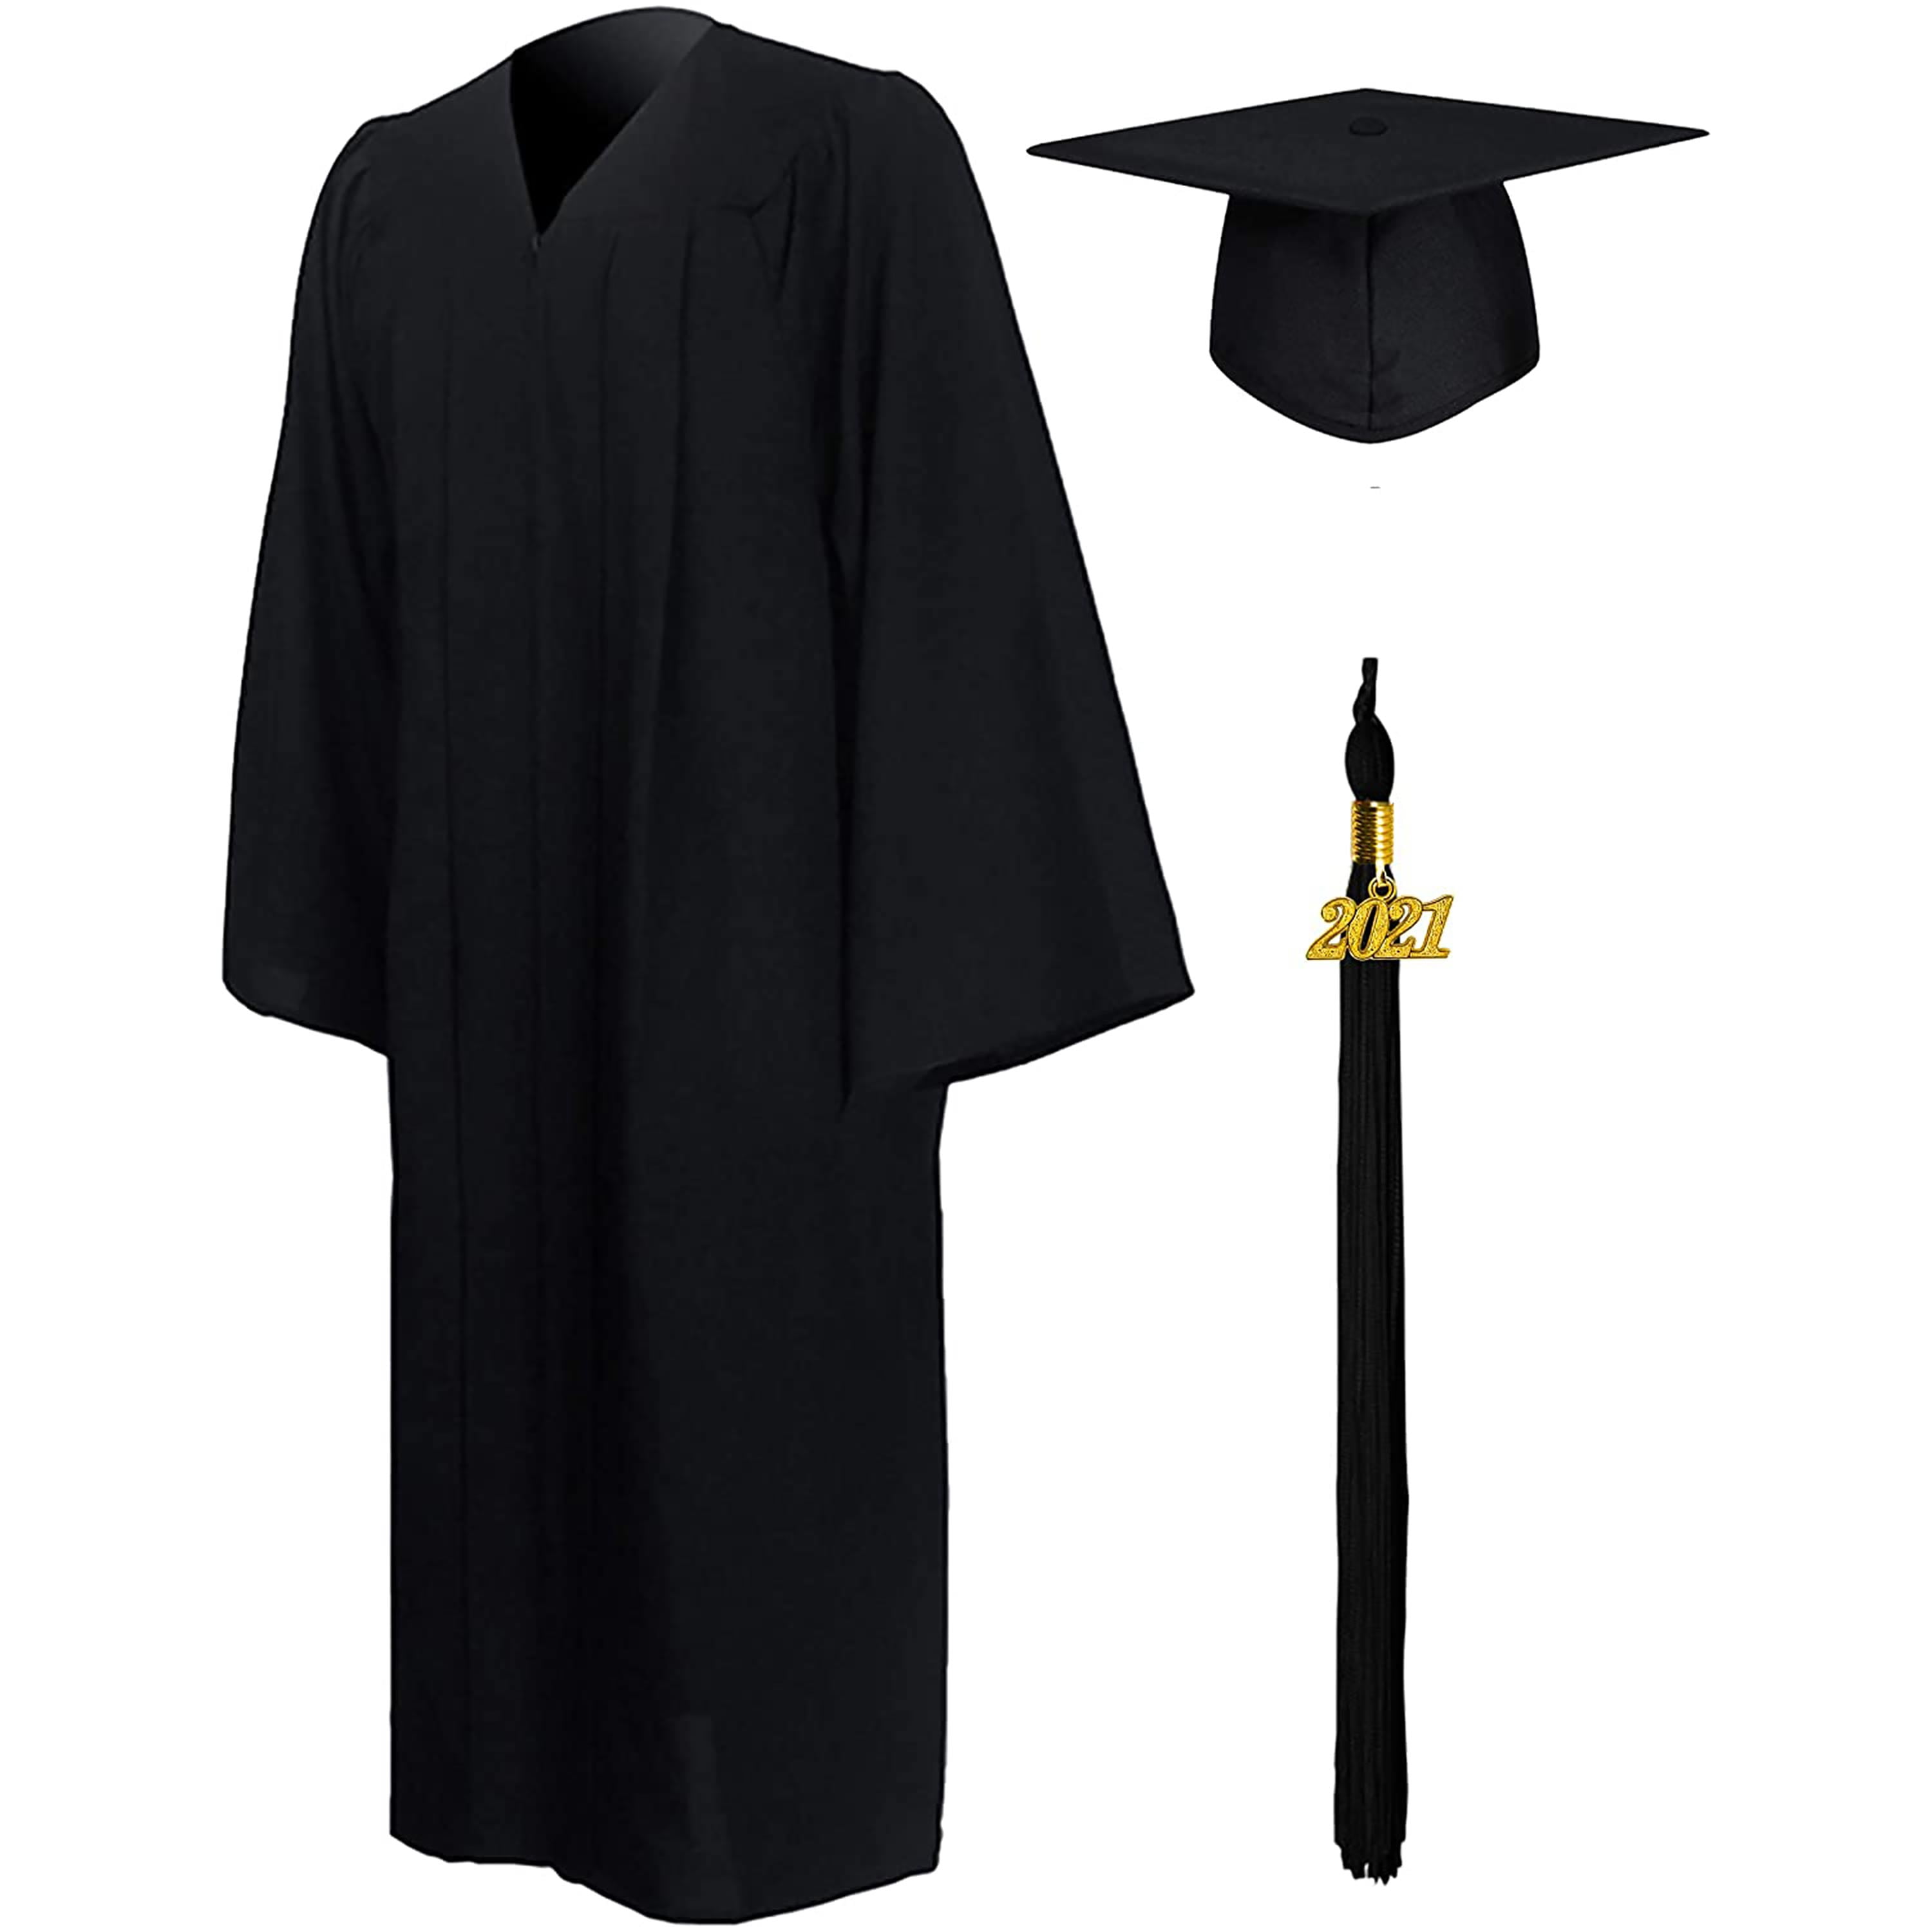 Lescapsgown Matte Graduation Gown and Cap Tassel 2019,All Sizes for Adult 